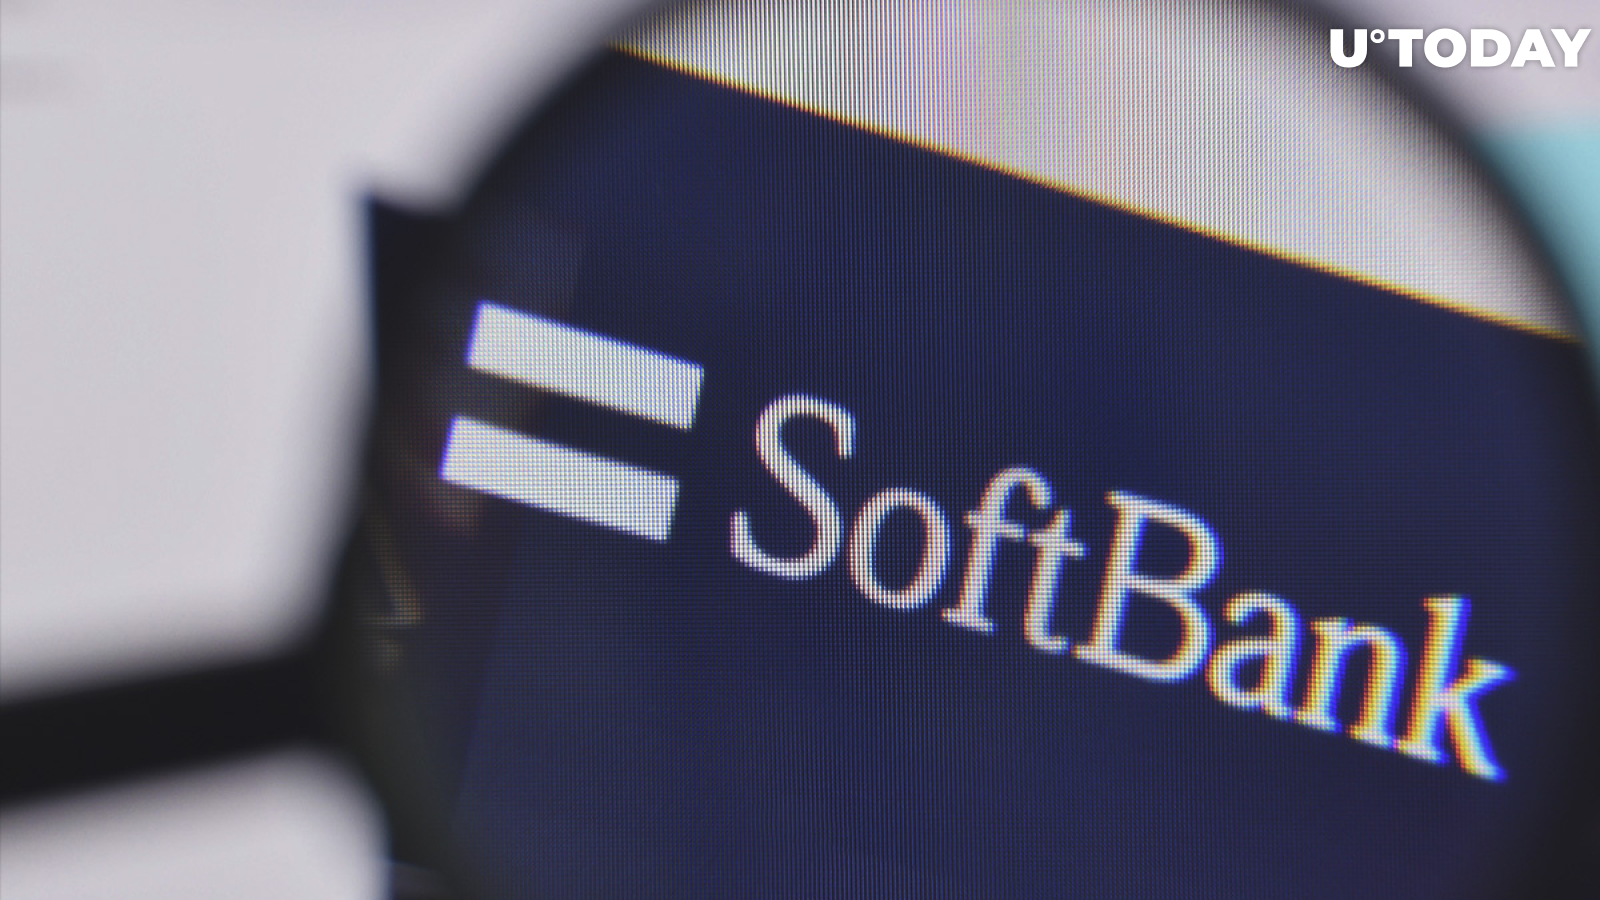 SoftBank to Put $75 Million into Peter Thiel-Backed Crypto Exchange